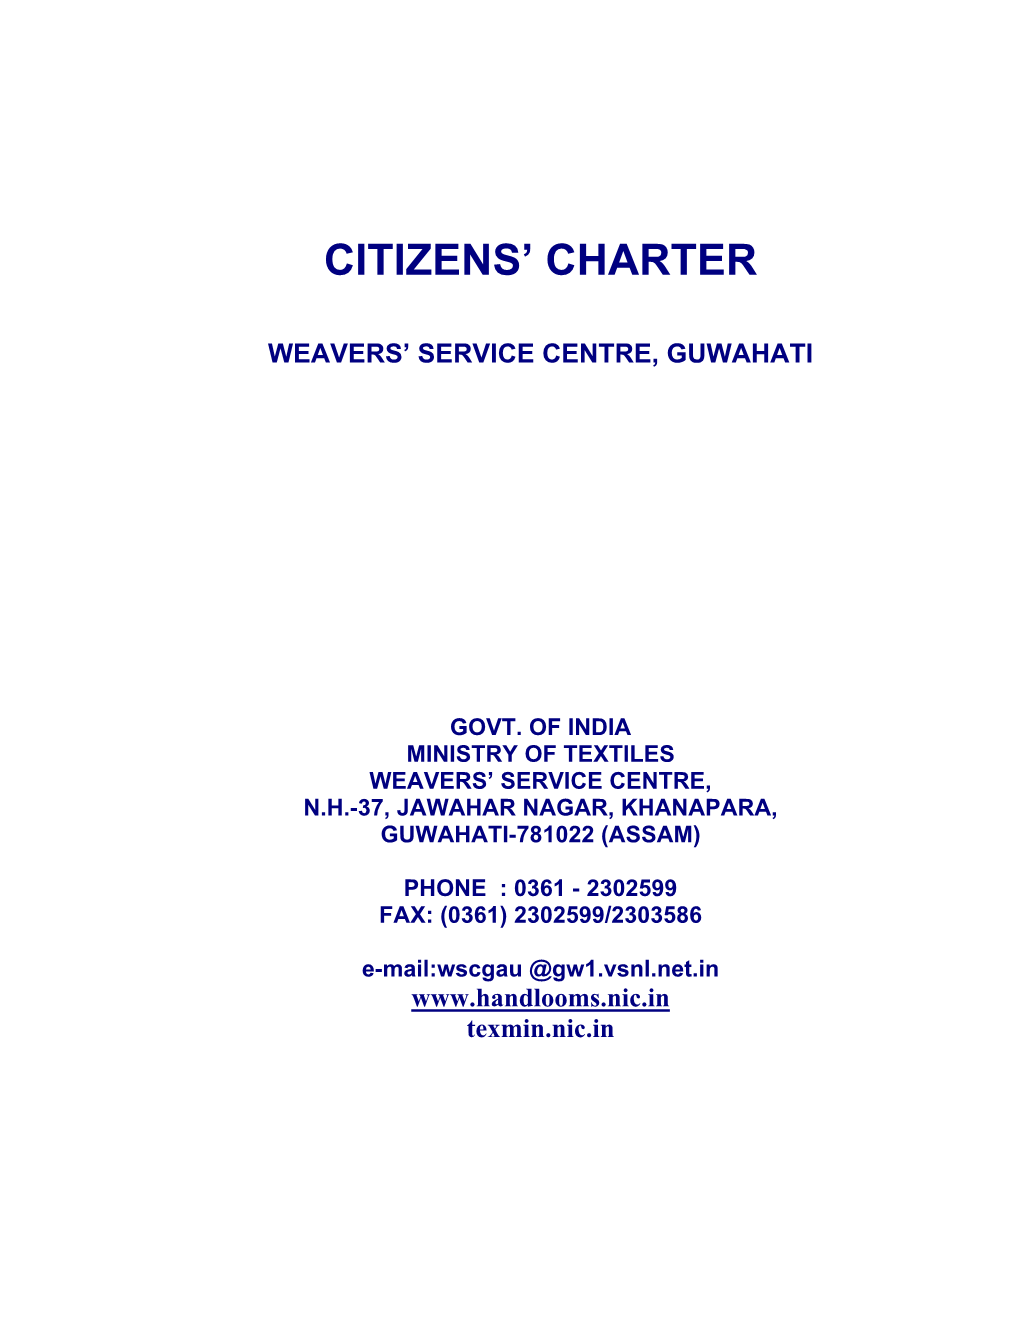 Weavers' Service Centre, Guwahati